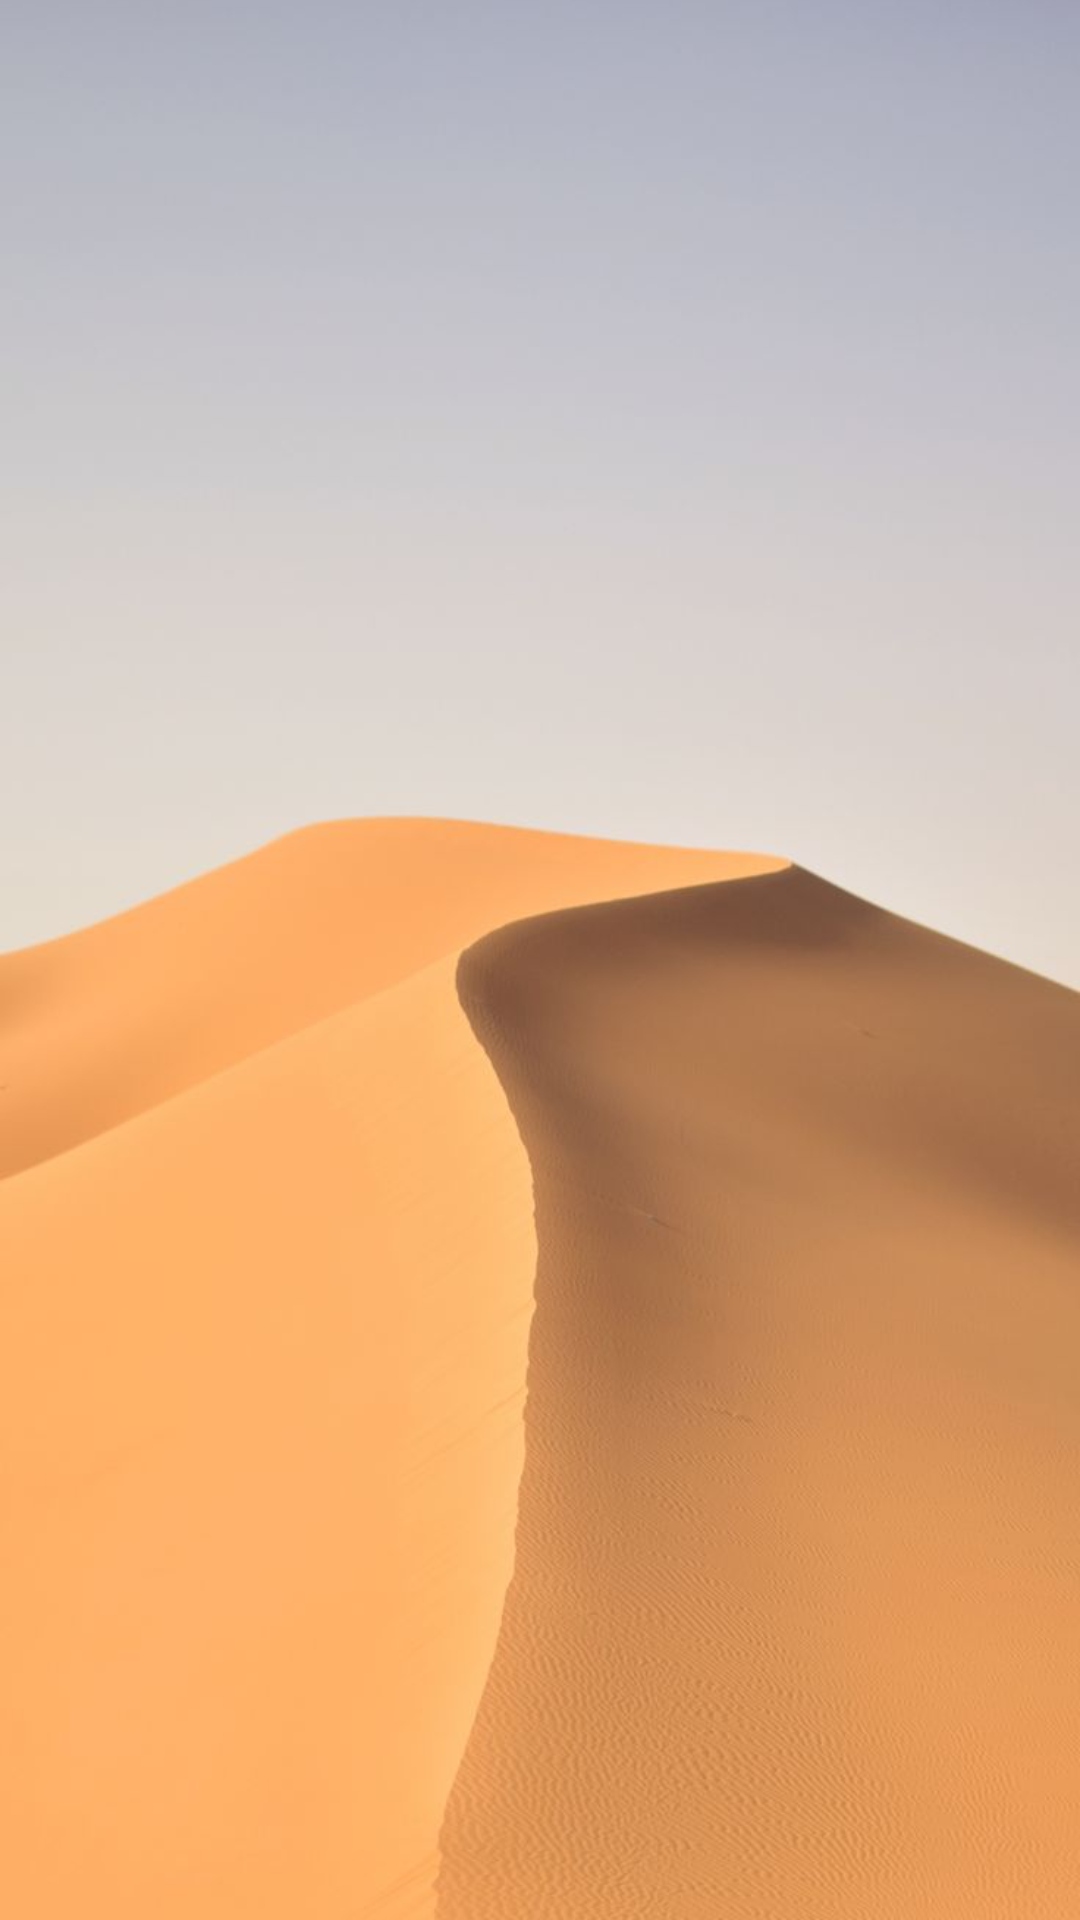 Namib Desert Images